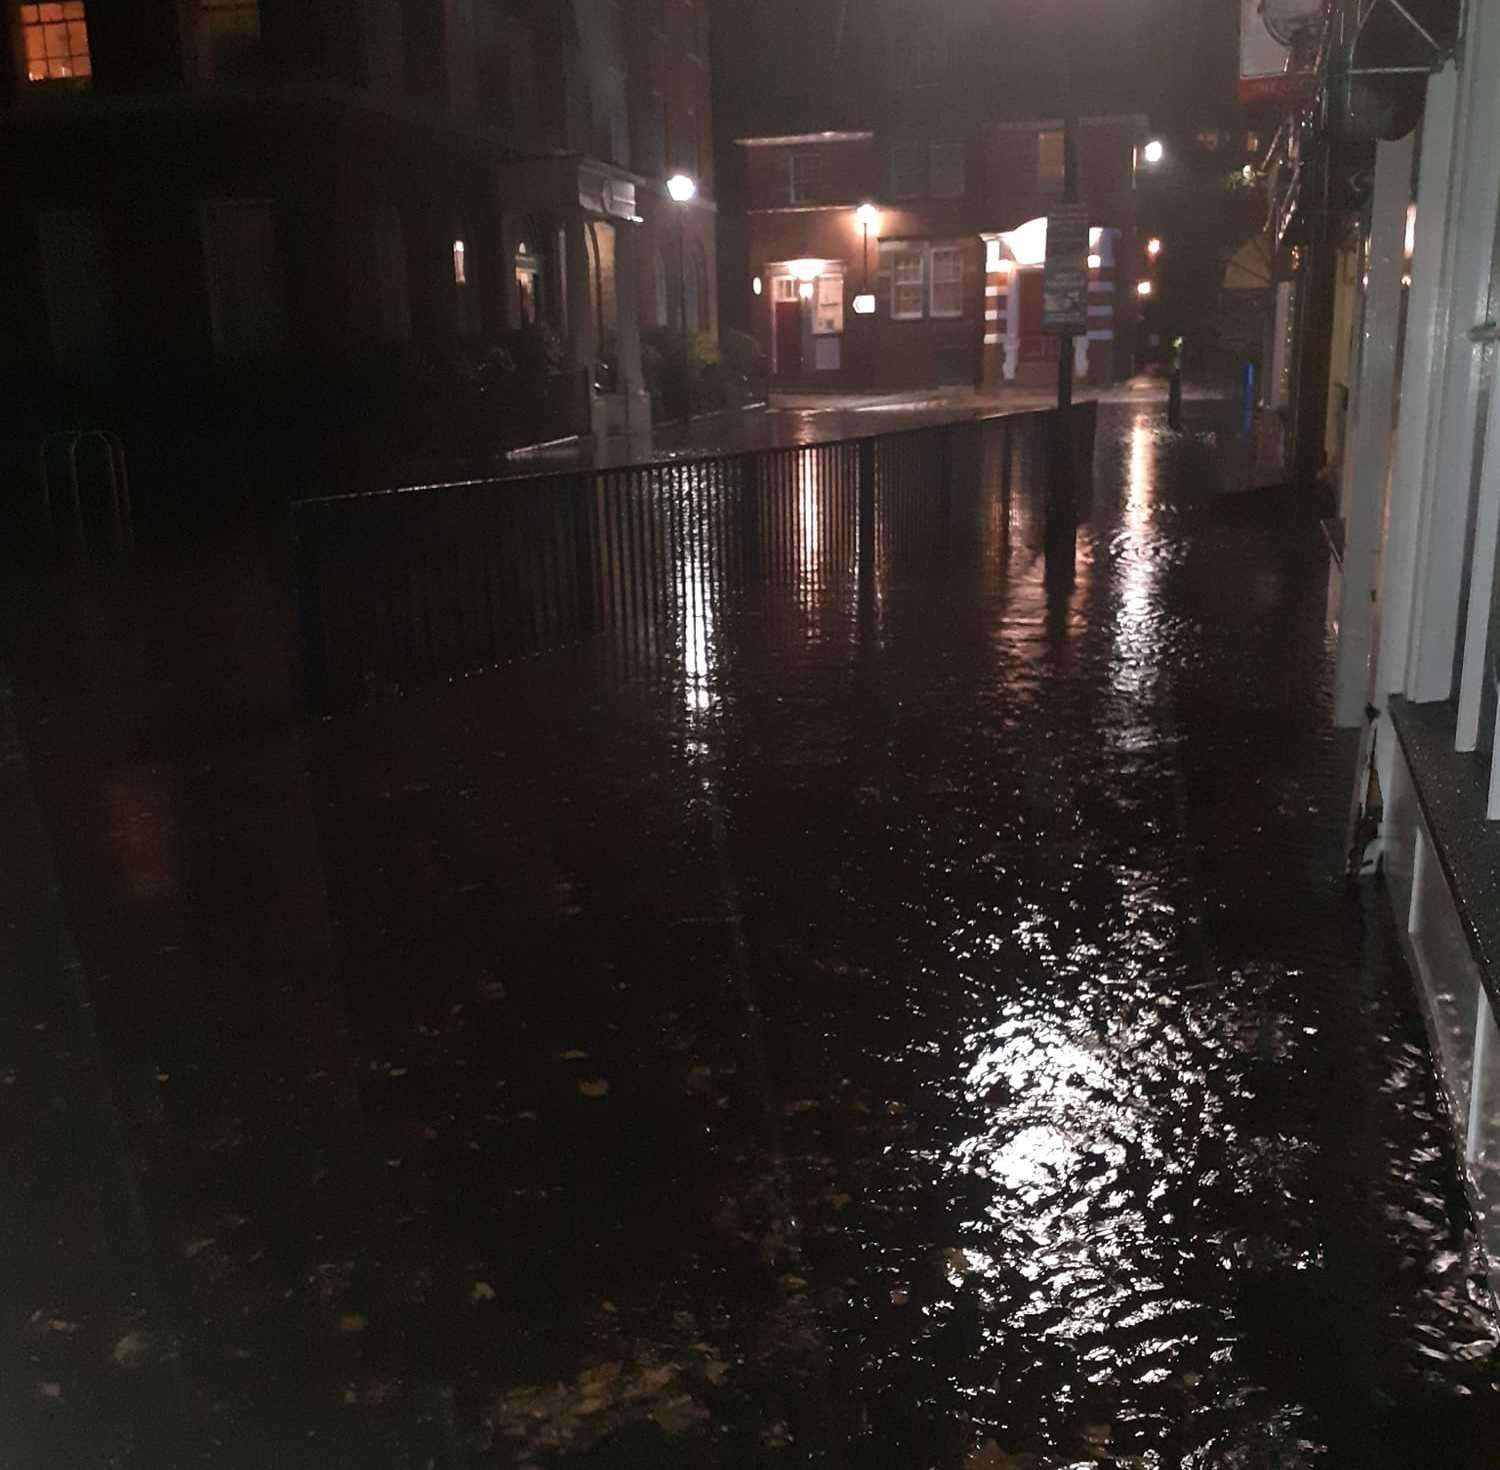 Flooding in Hythe High Street. Photo: Diana Chapman